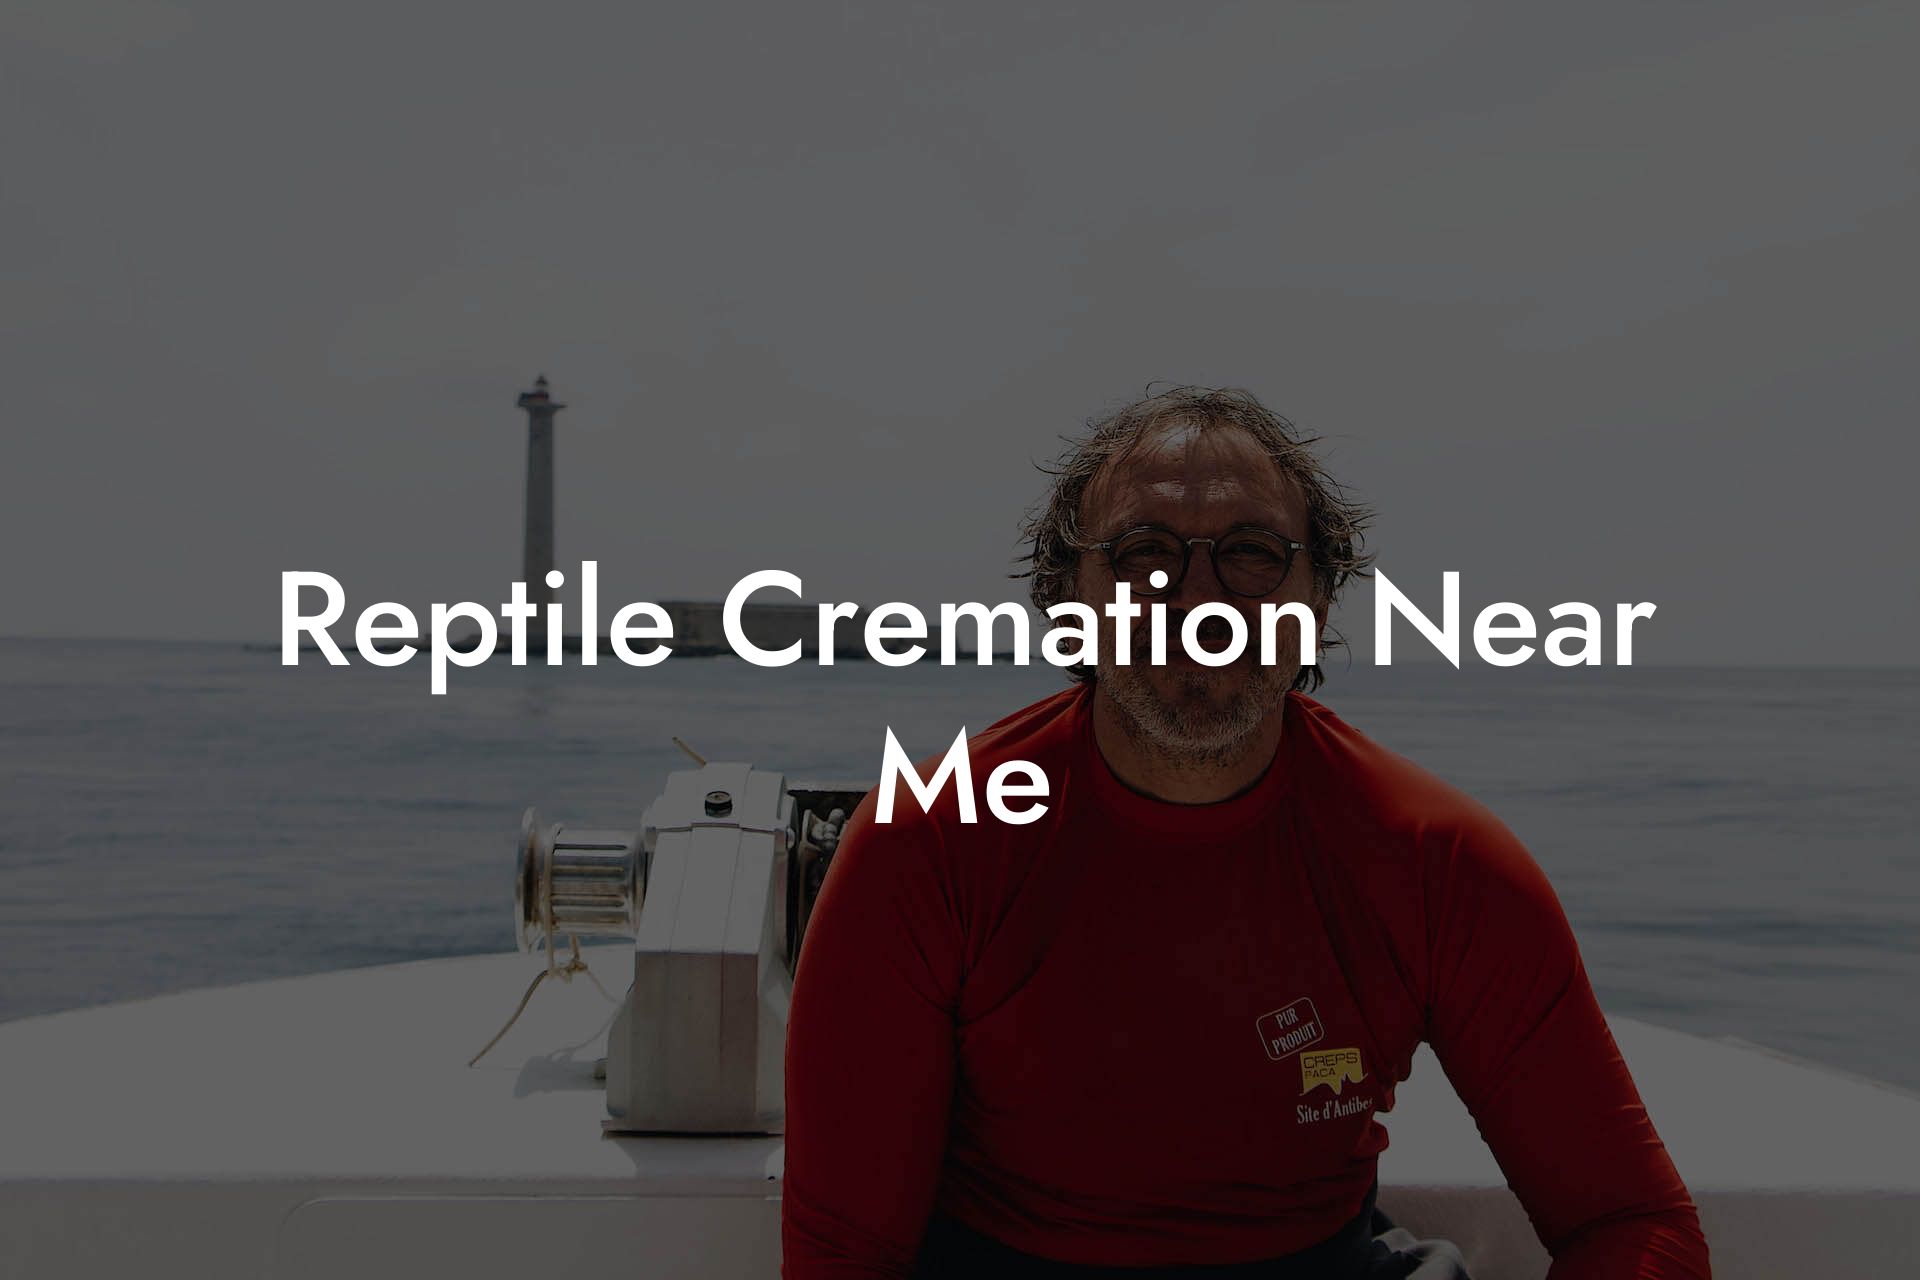 Reptile Cremation Near Me